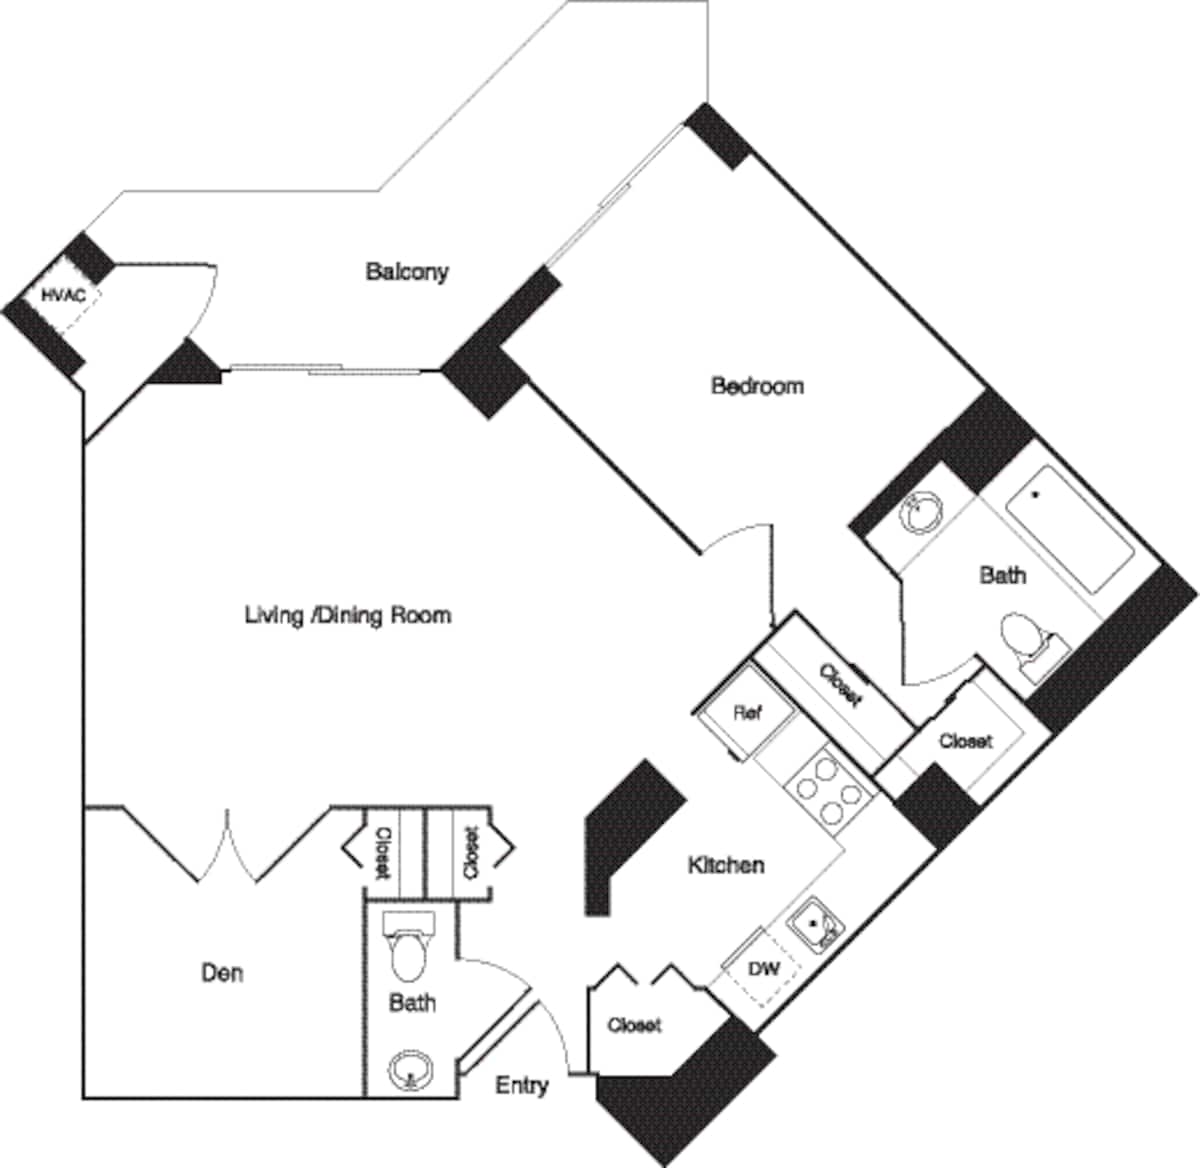 Floorplan diagram for G (Evergreen), showing 1 bedroom